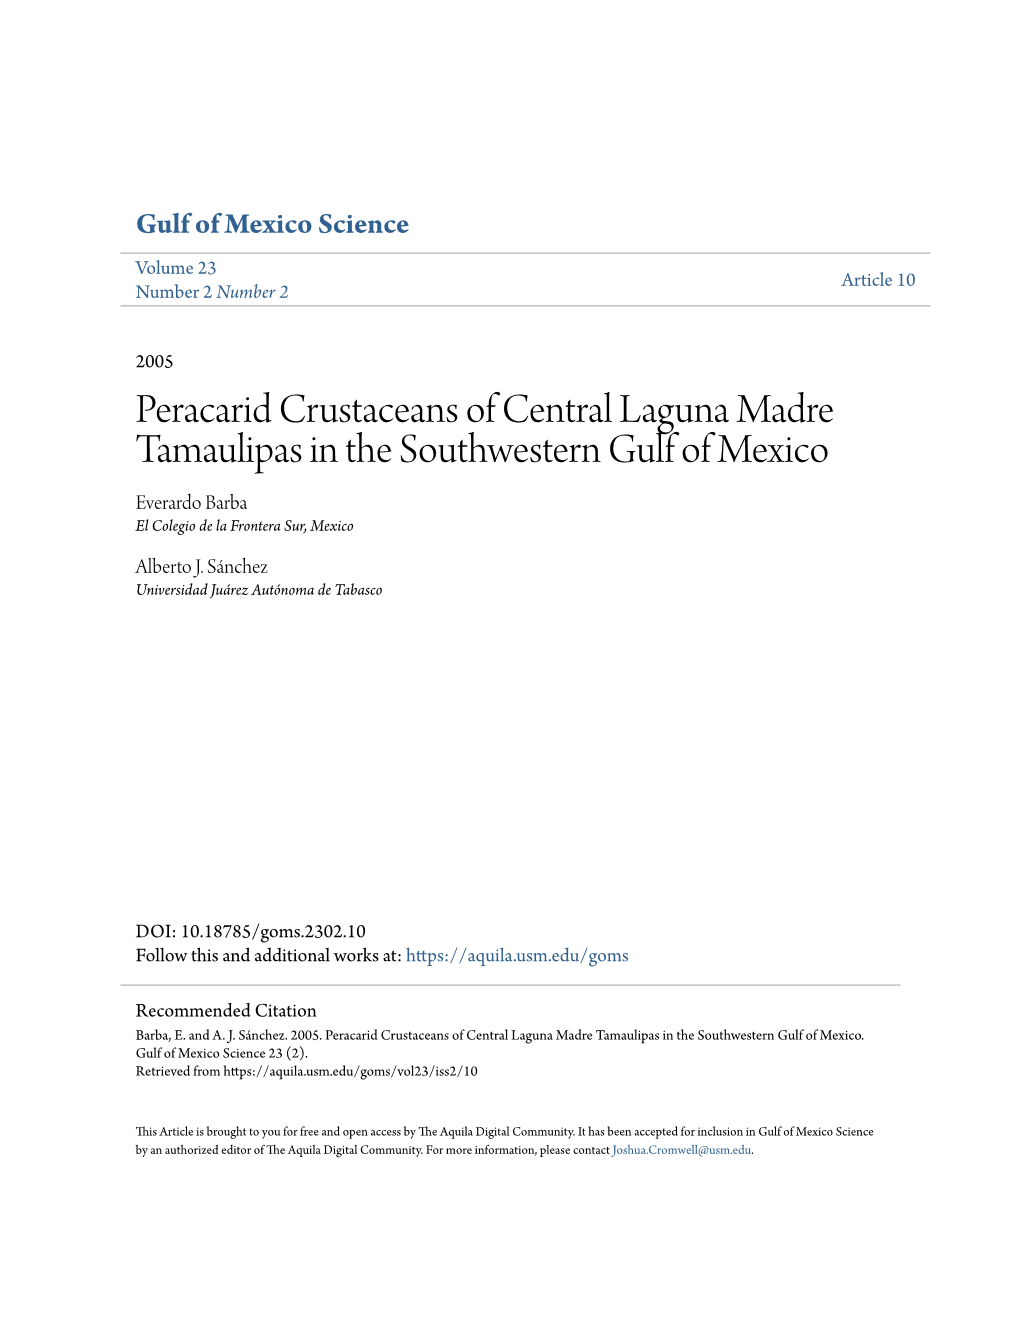 Peracarid Crustaceans of Central Laguna Madre Tamaulipas in the Southwestern Gulf of Mexico Everardo Barba El Colegio De La Frontera Sur, Mexico